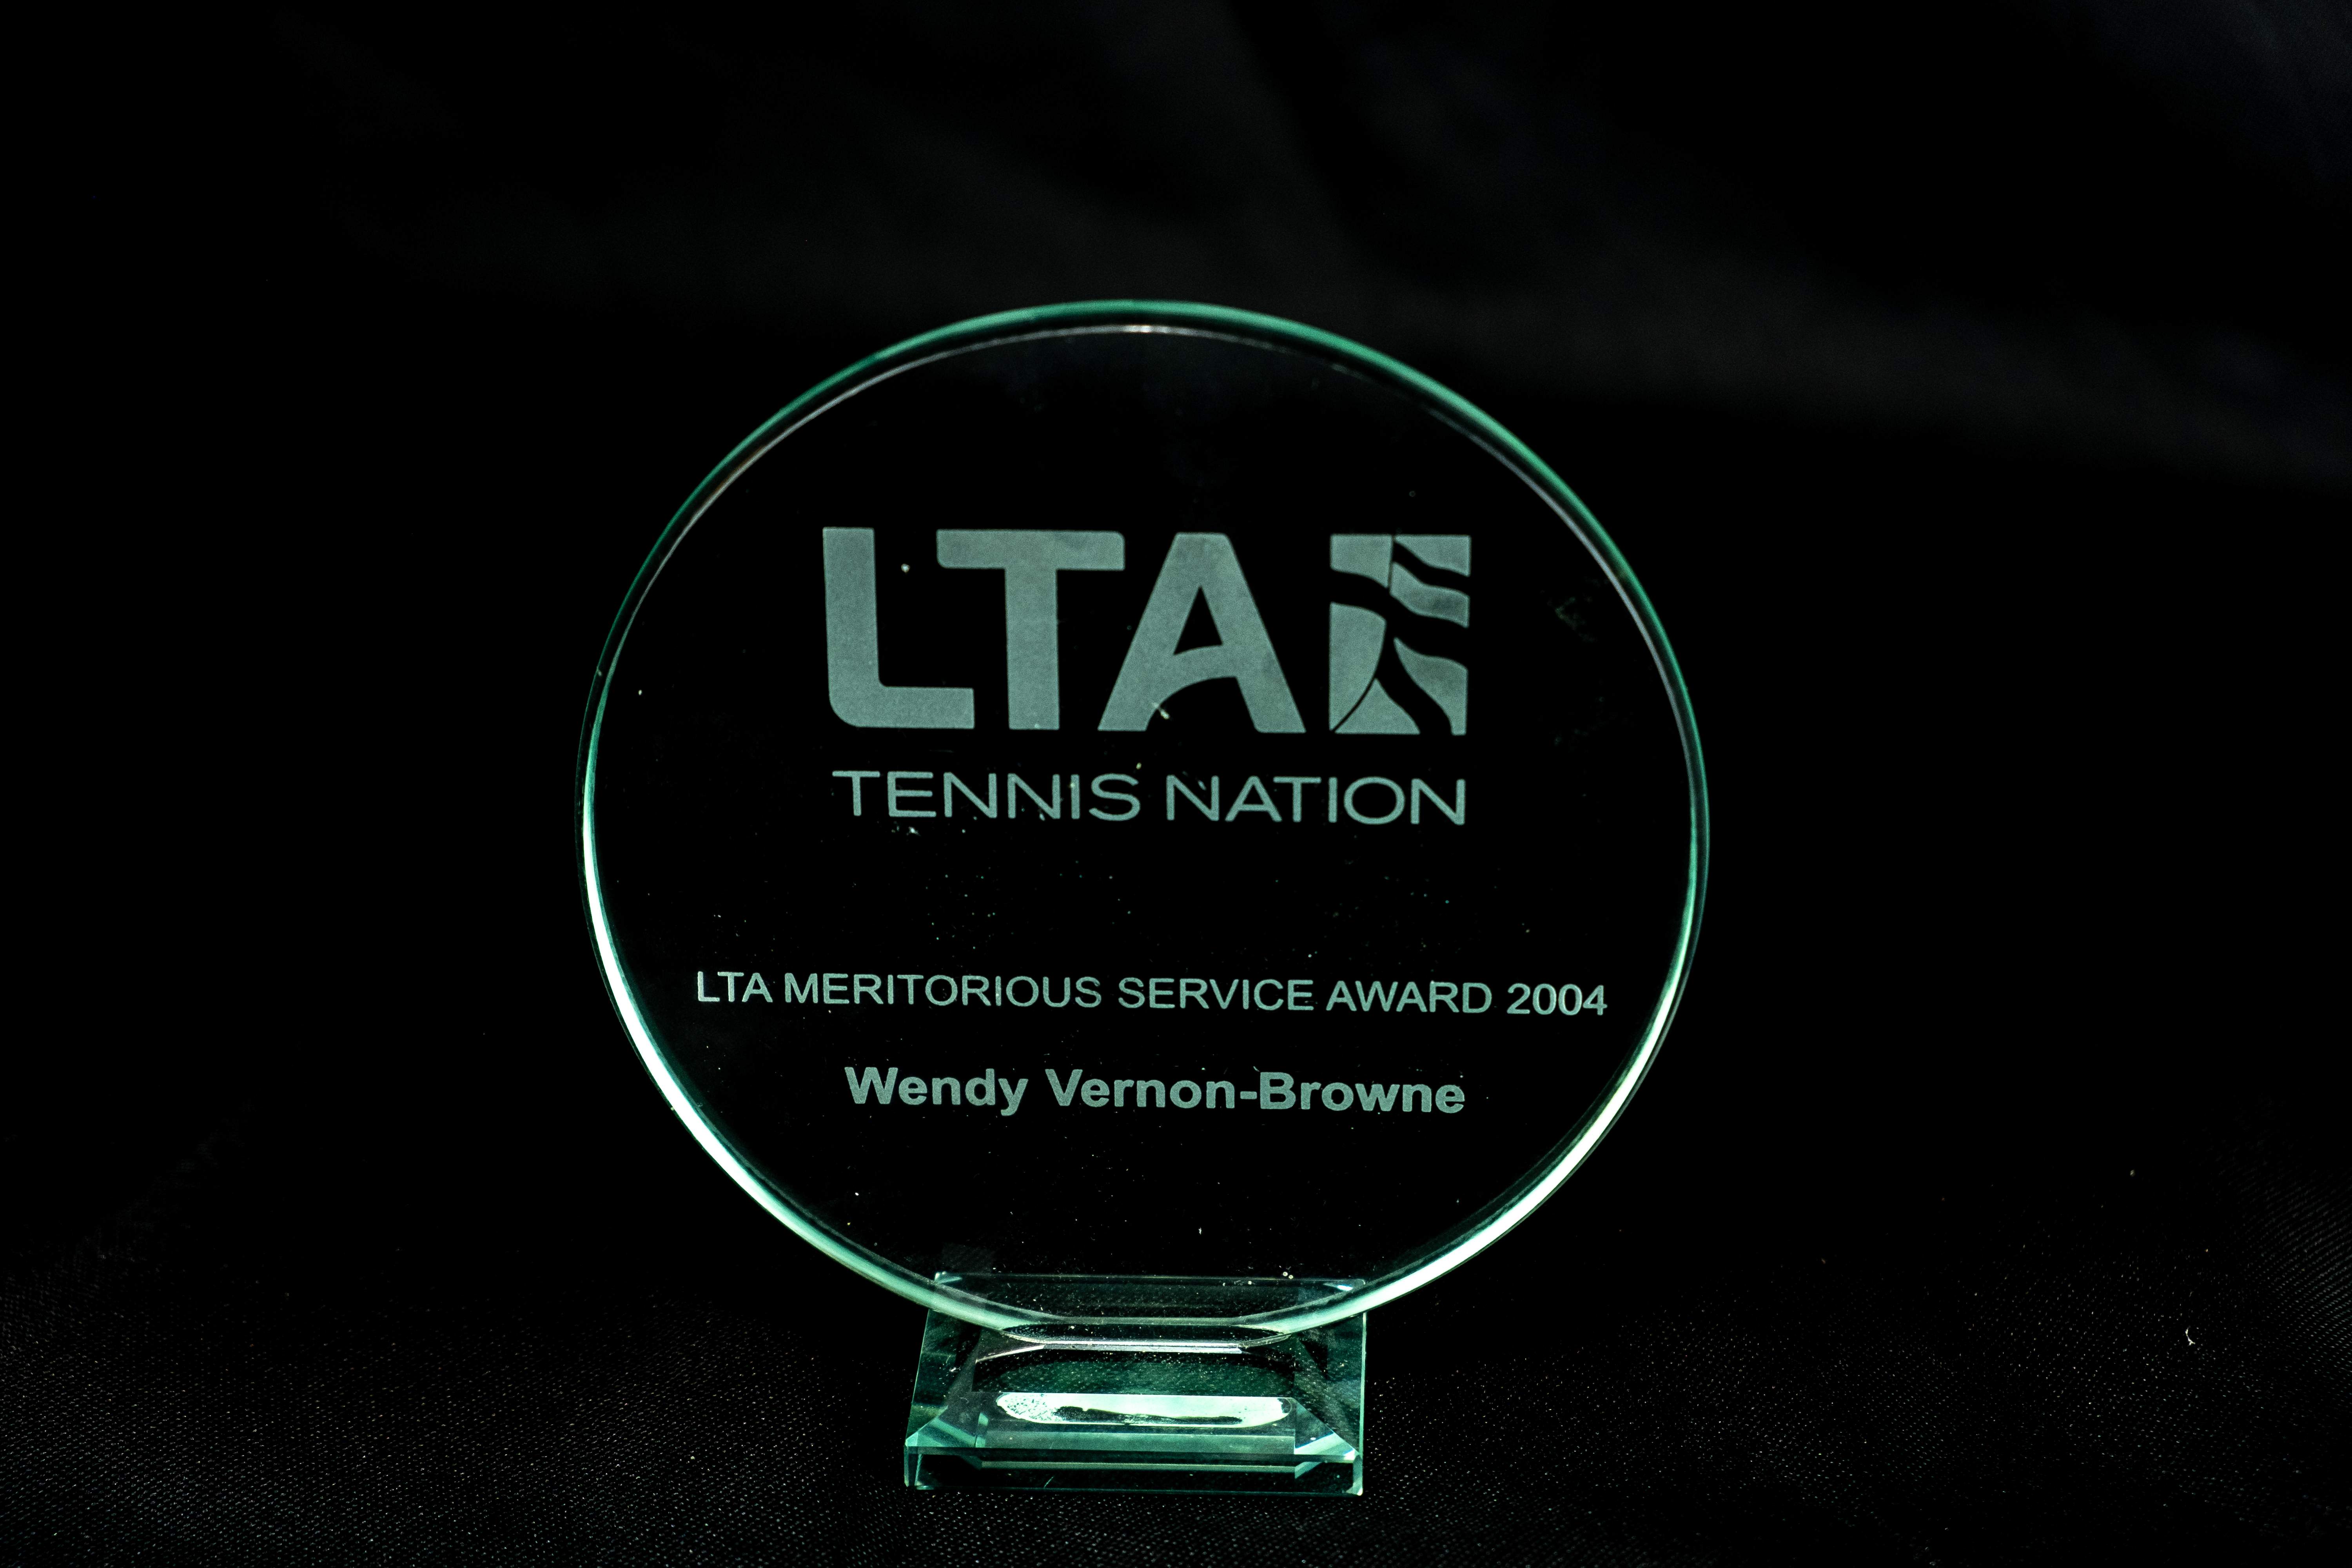 LTA Meritorious Service Award 2004